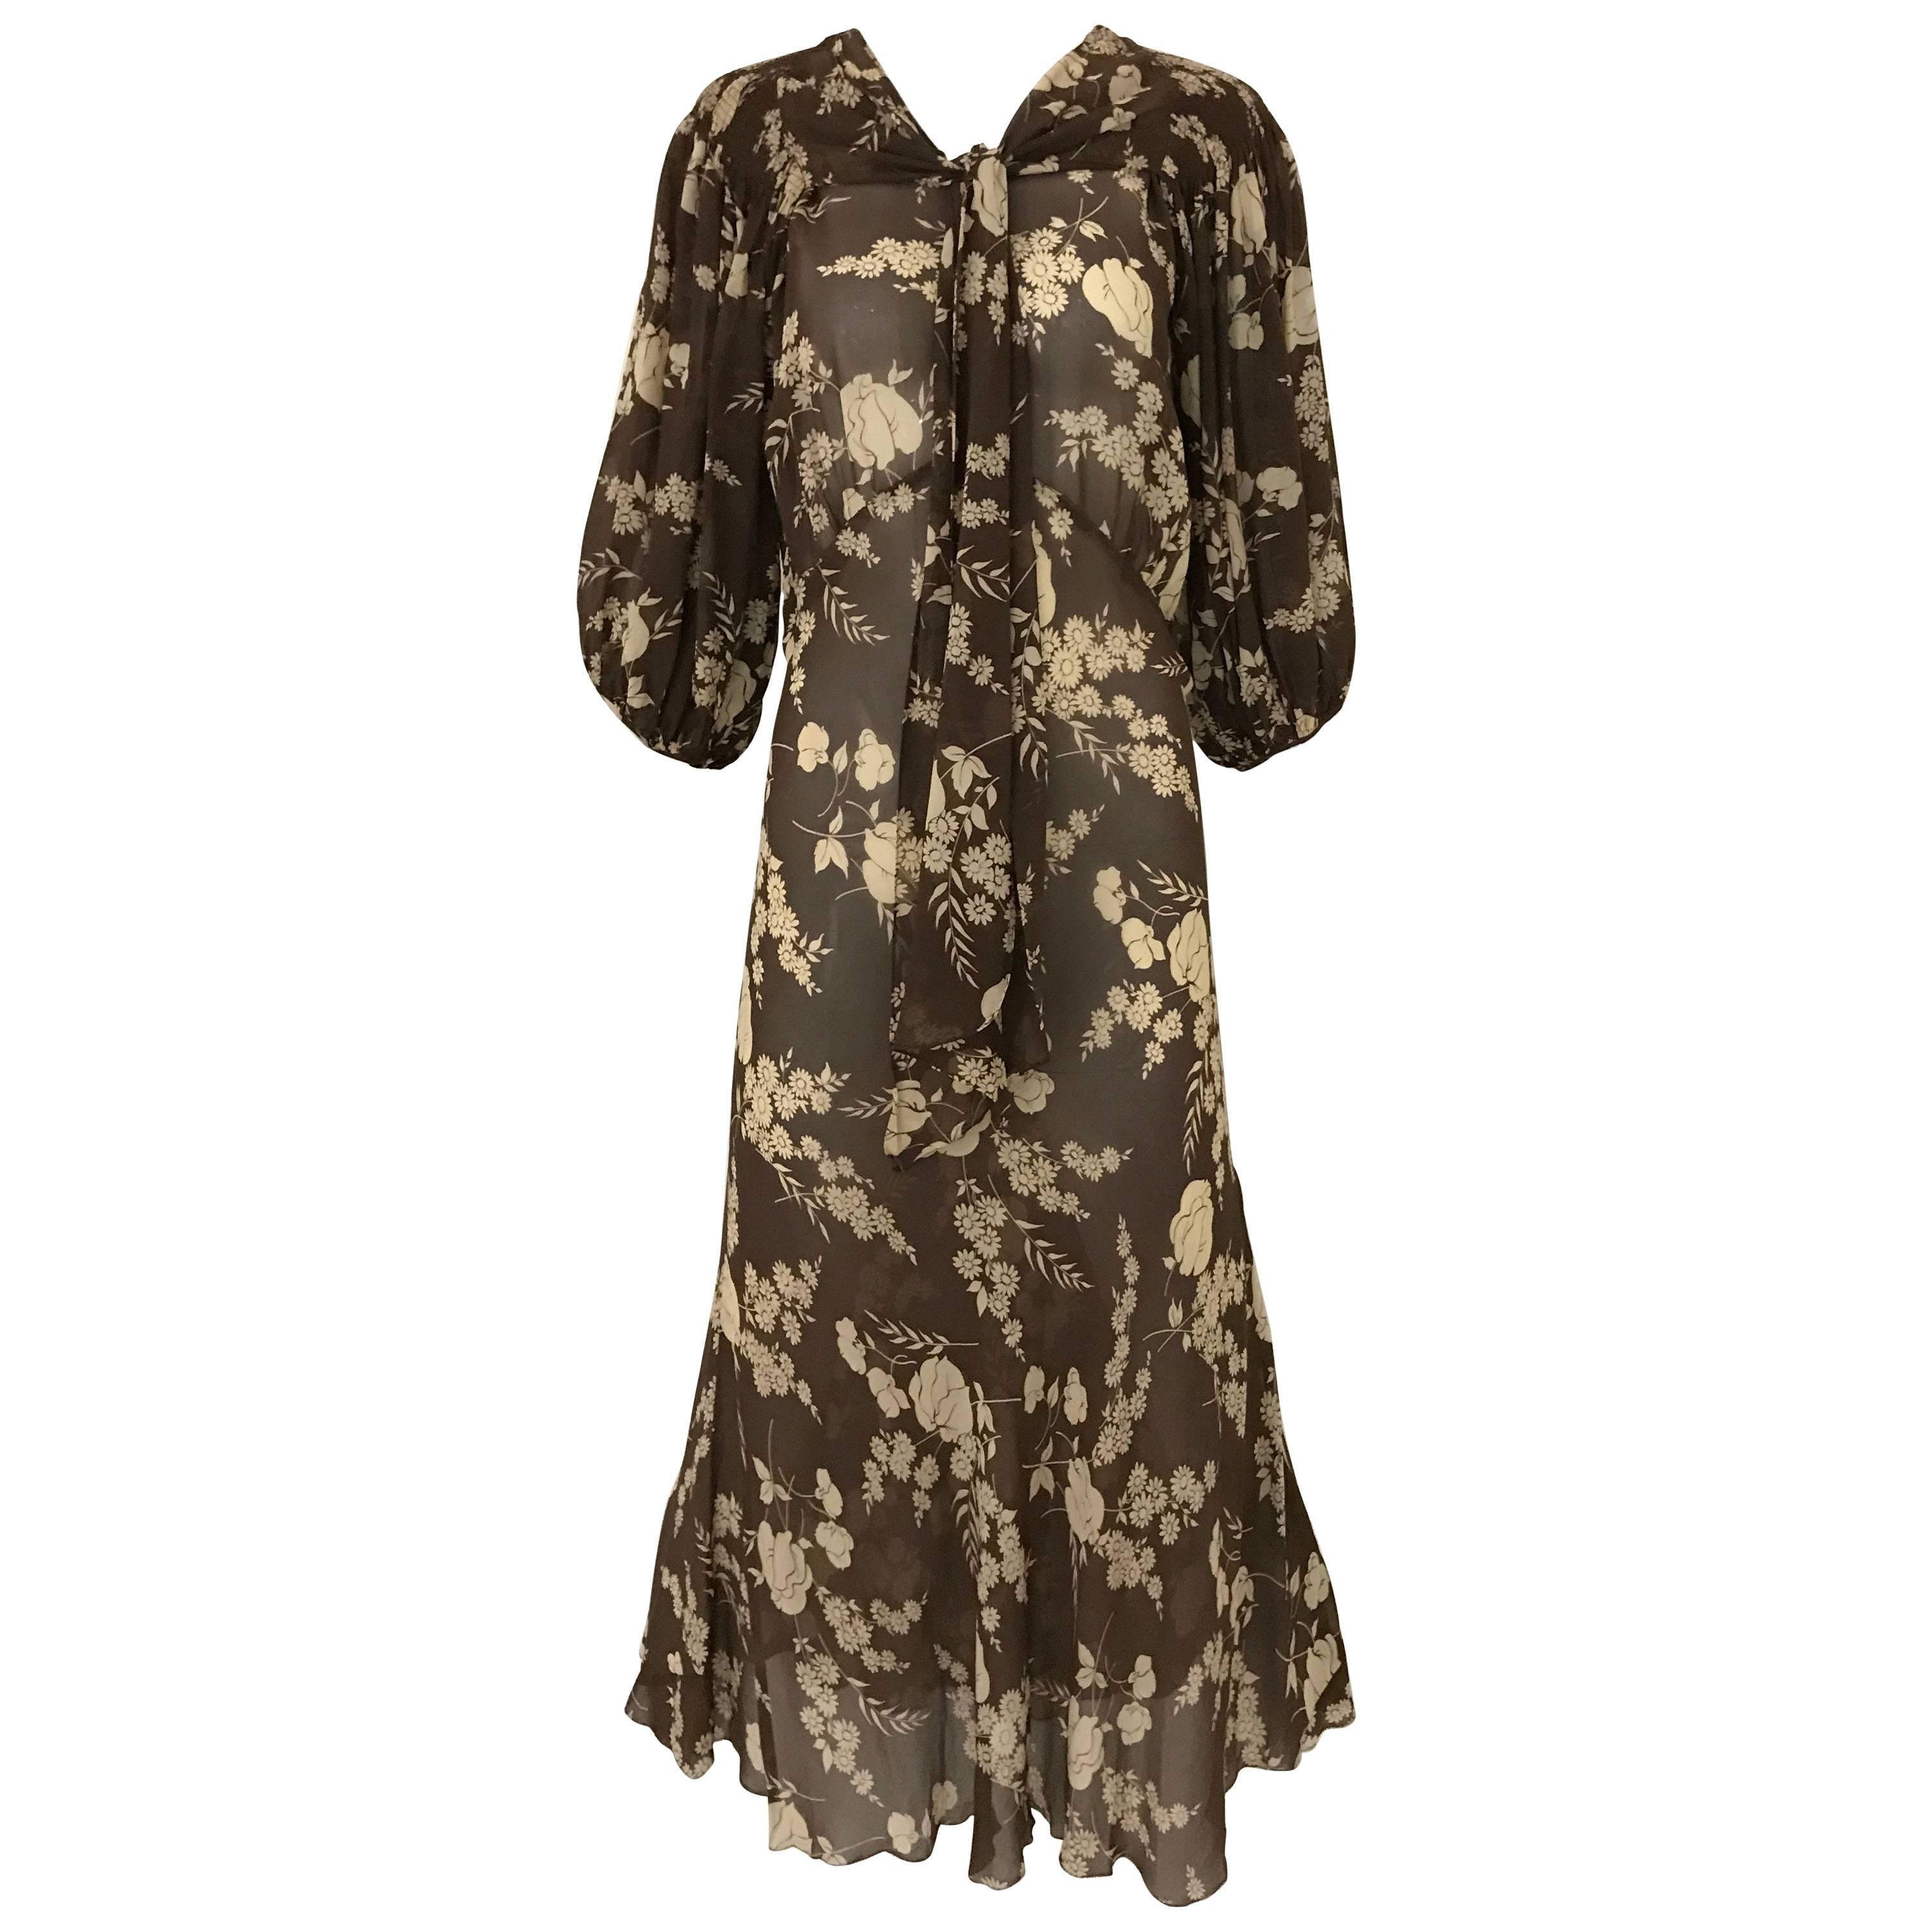 1930s Brown and Creme Floral Print Silk Dress